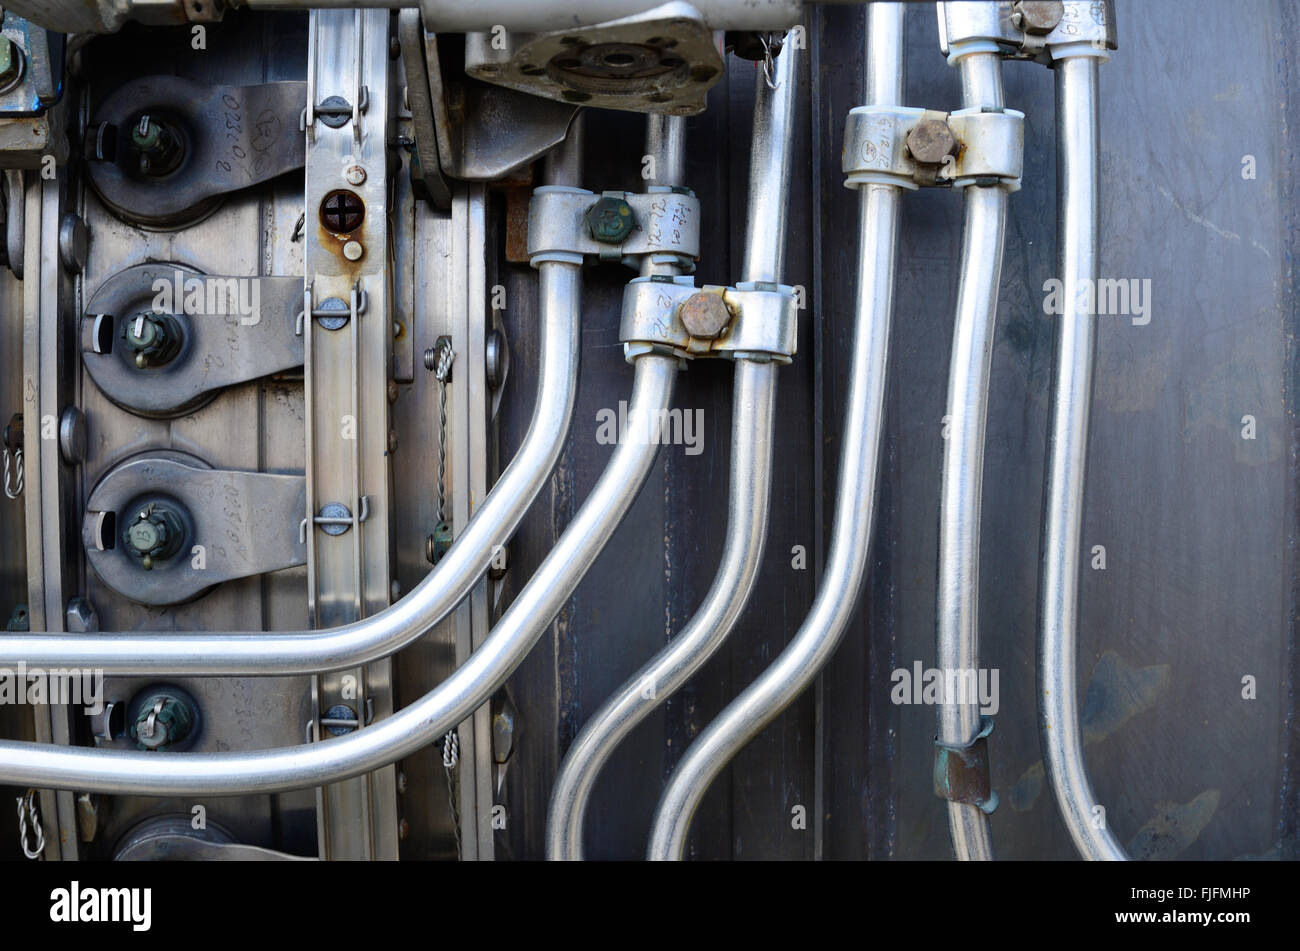 Inside of the jet turbine engine Stock Photo